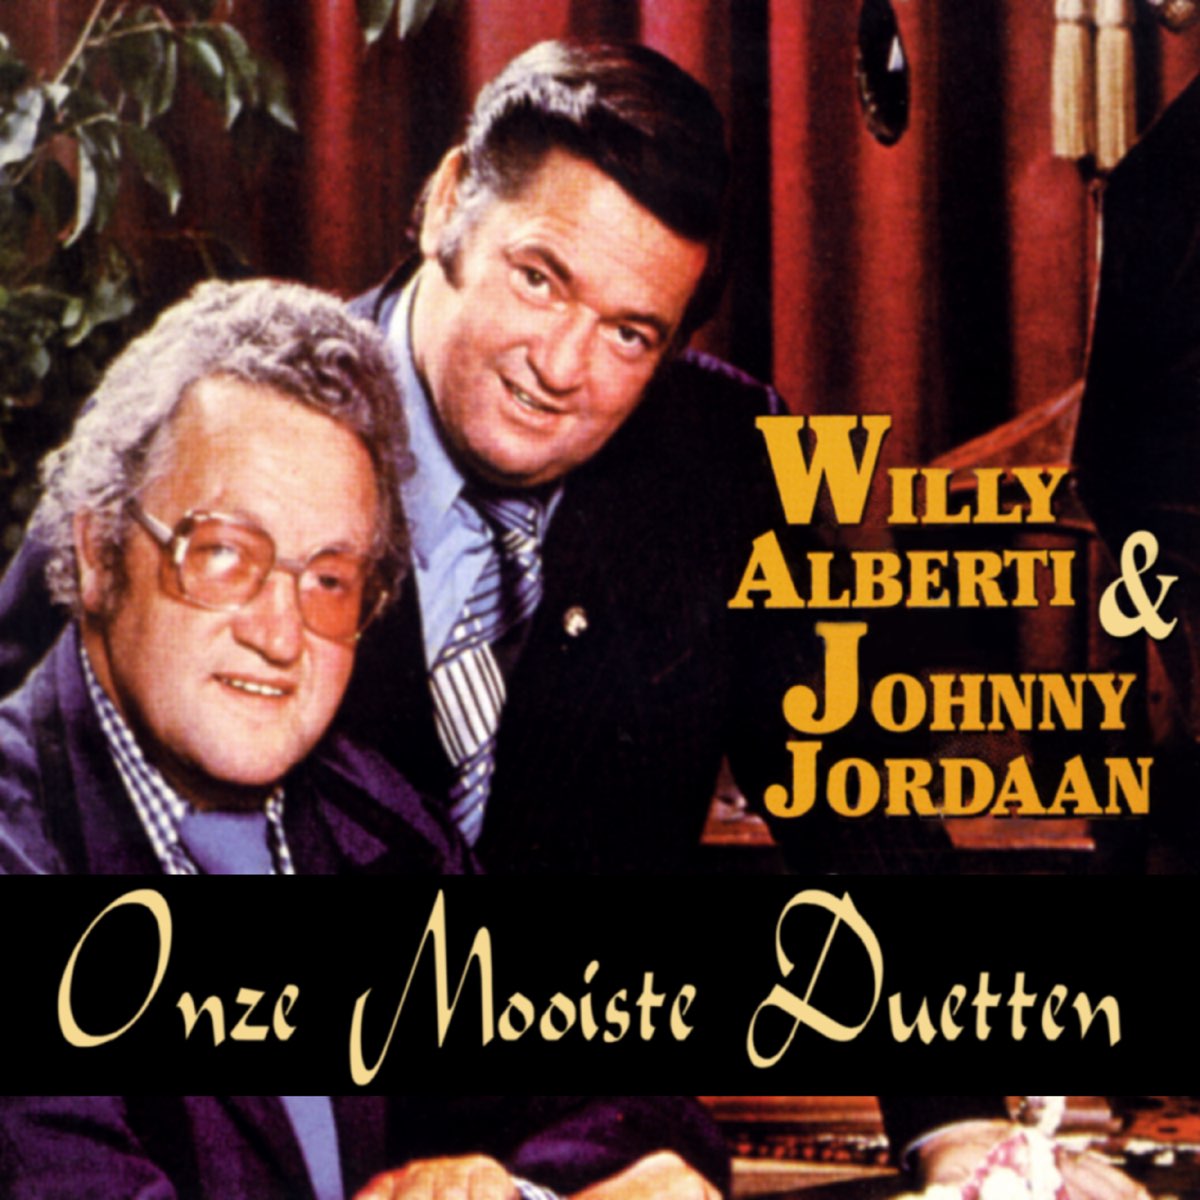 Mooiste Duetten by Jordaan & Willy Alberti on Apple Music